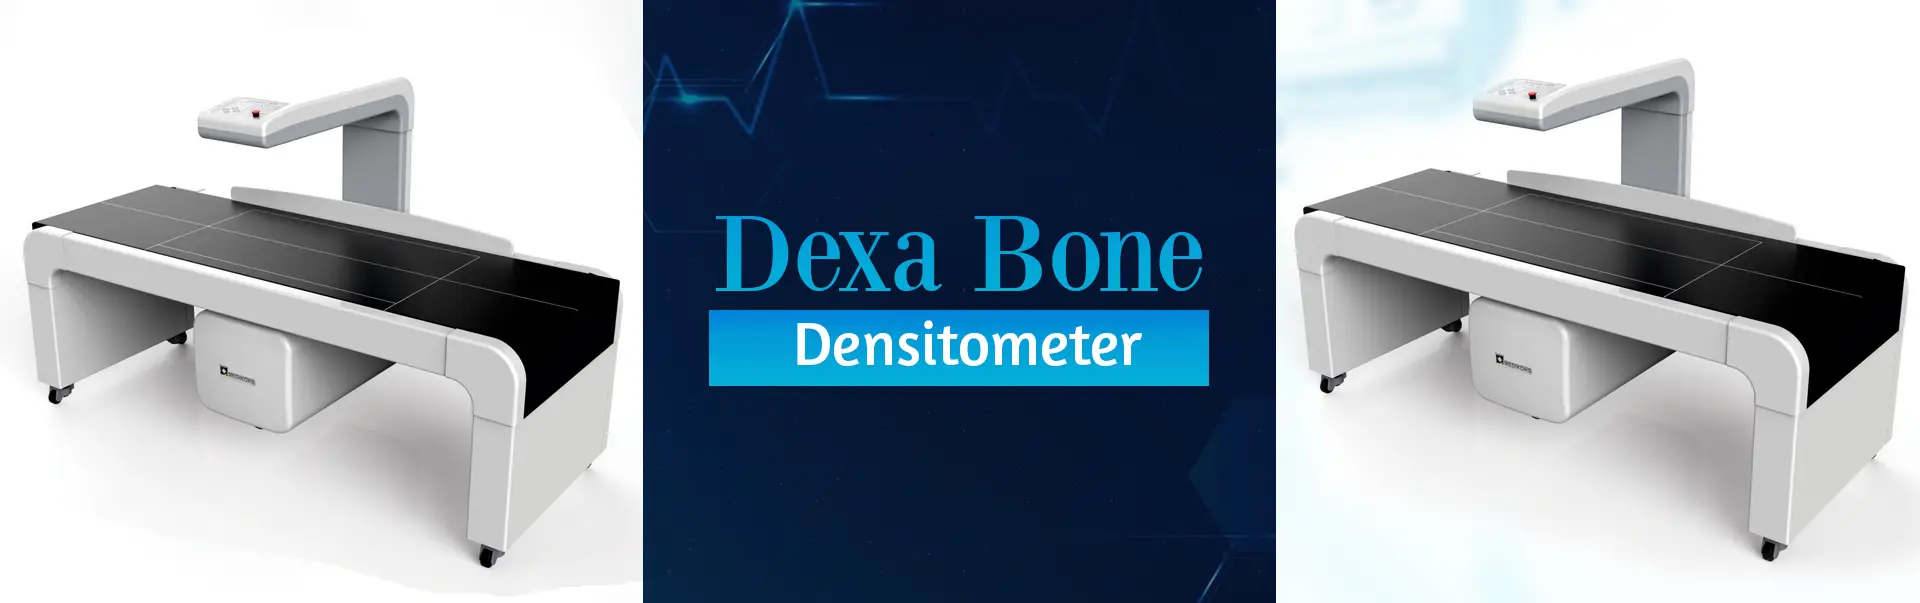 Dexa Bone Densitometer Manufacturers in Bokaro